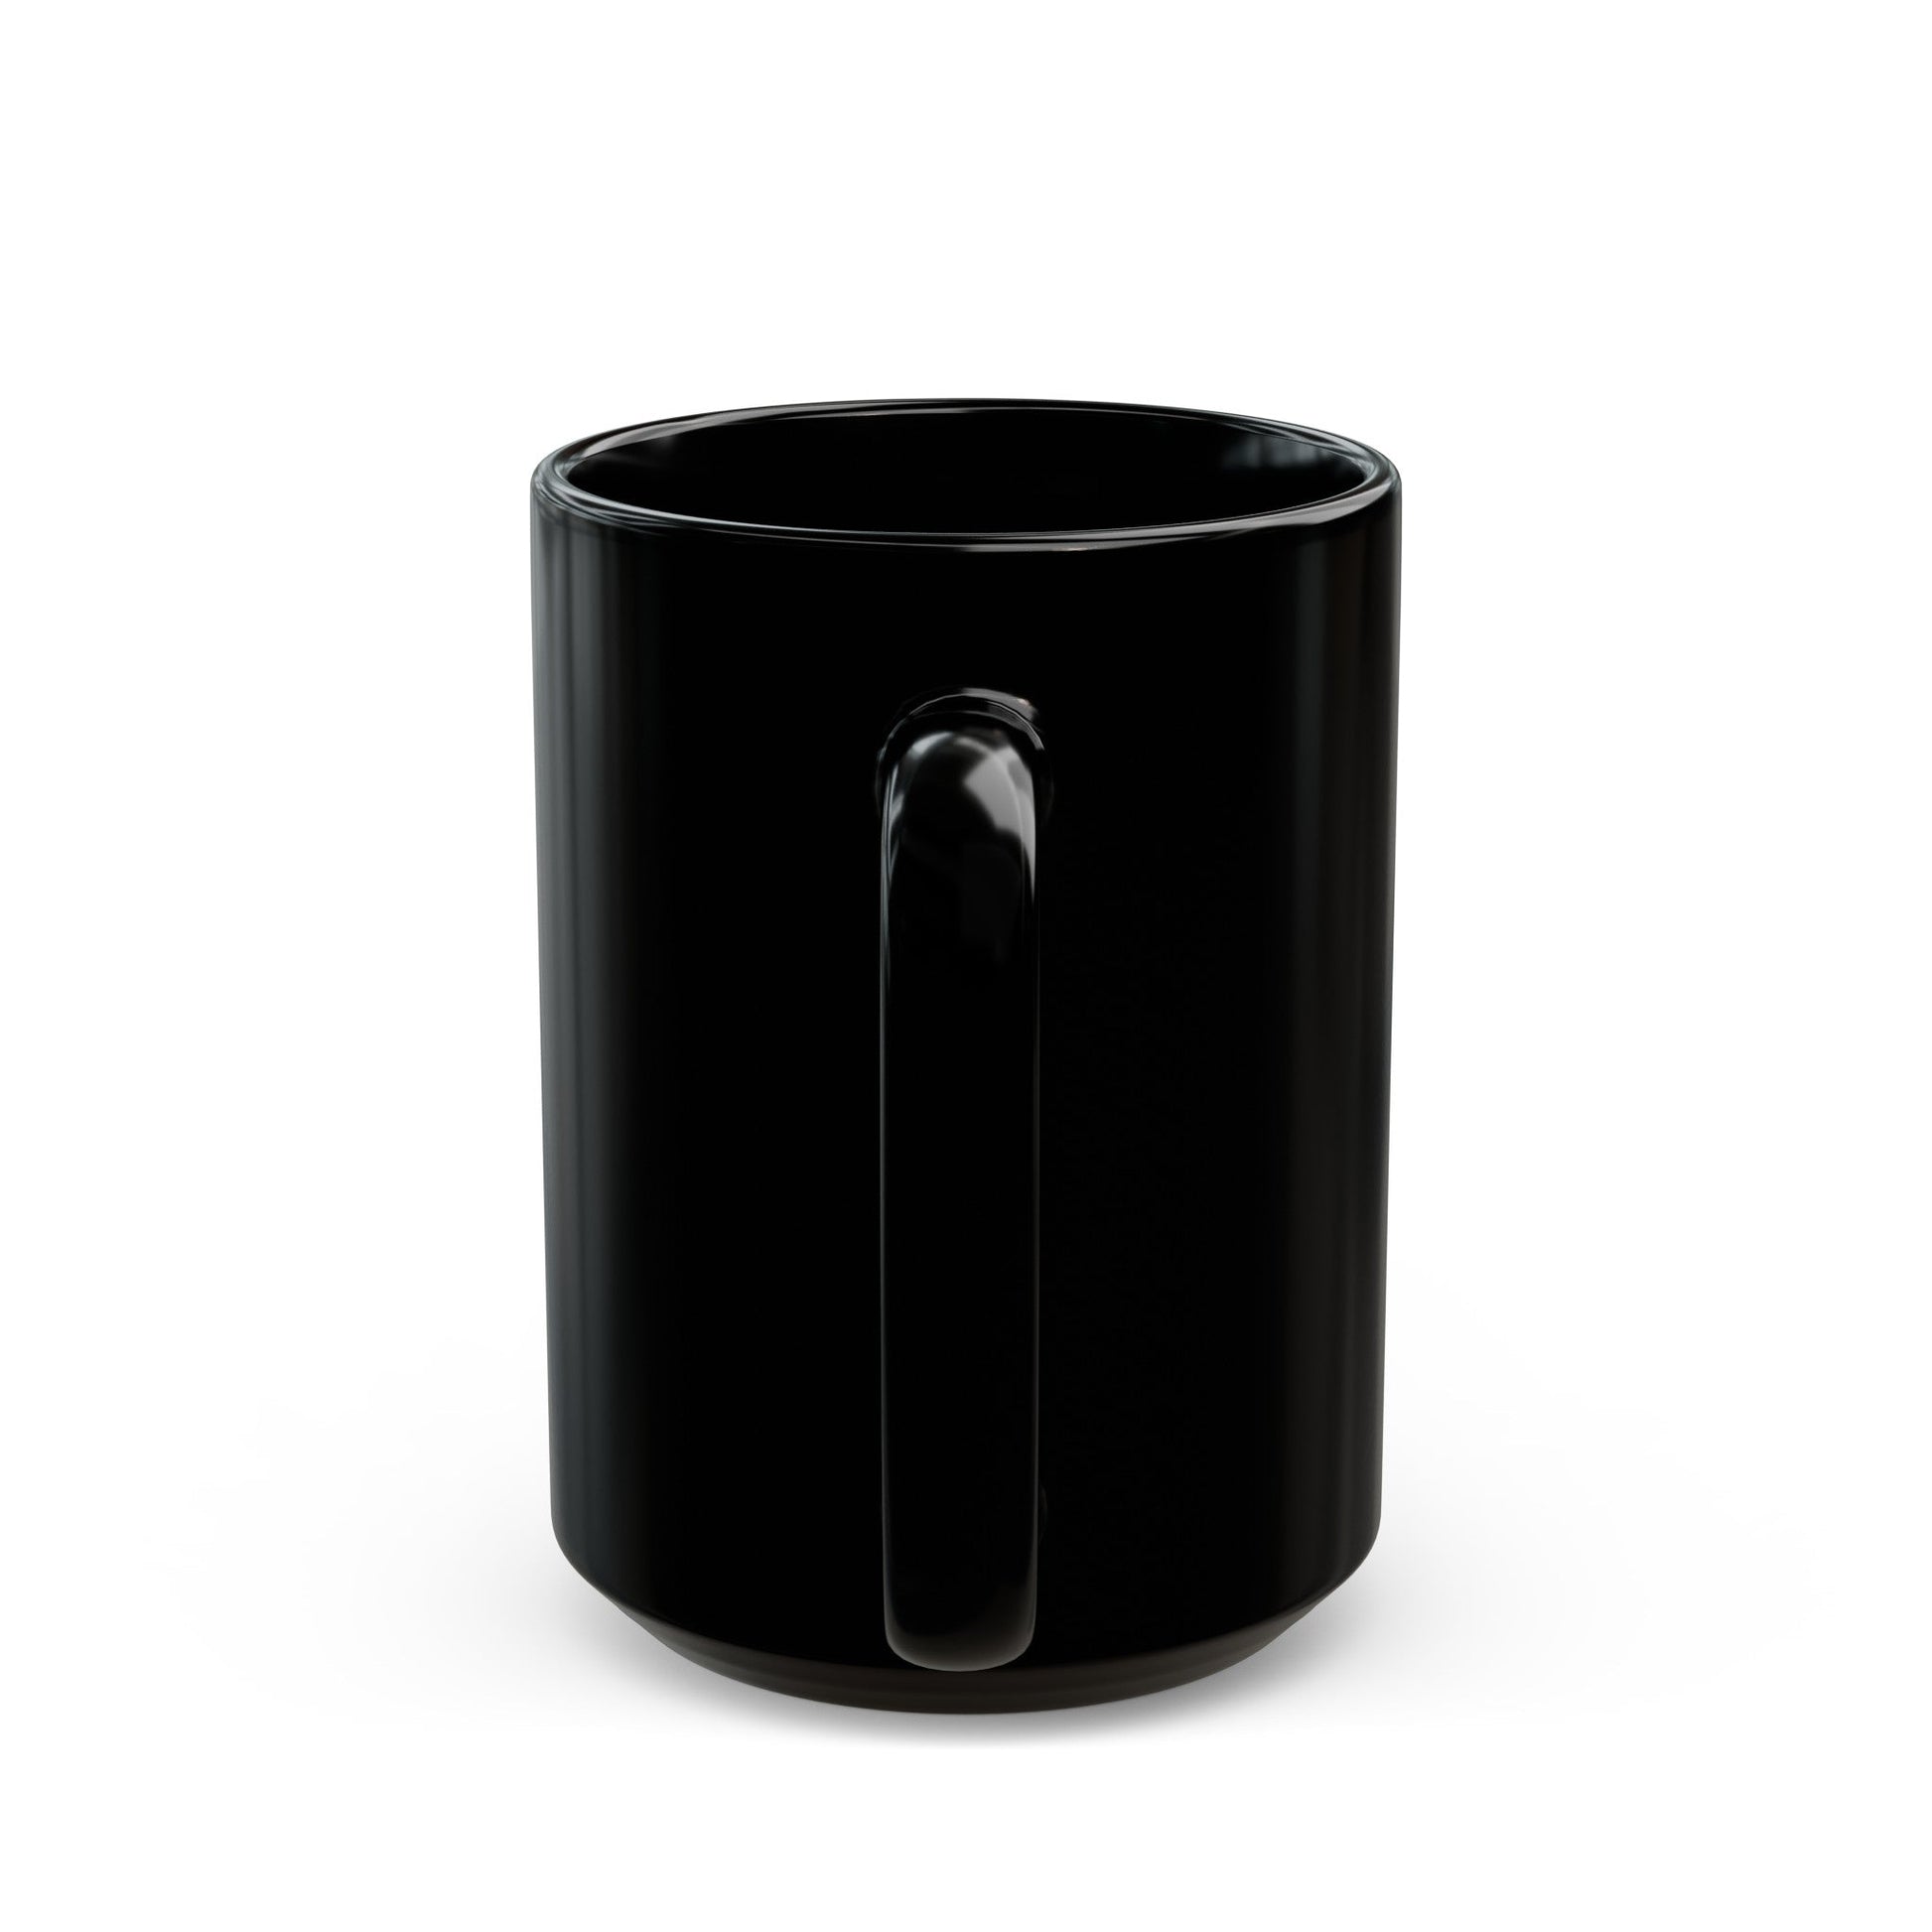 Tech Bridge London (U.S. Navy) Black Coffee Mug-The Sticker Space